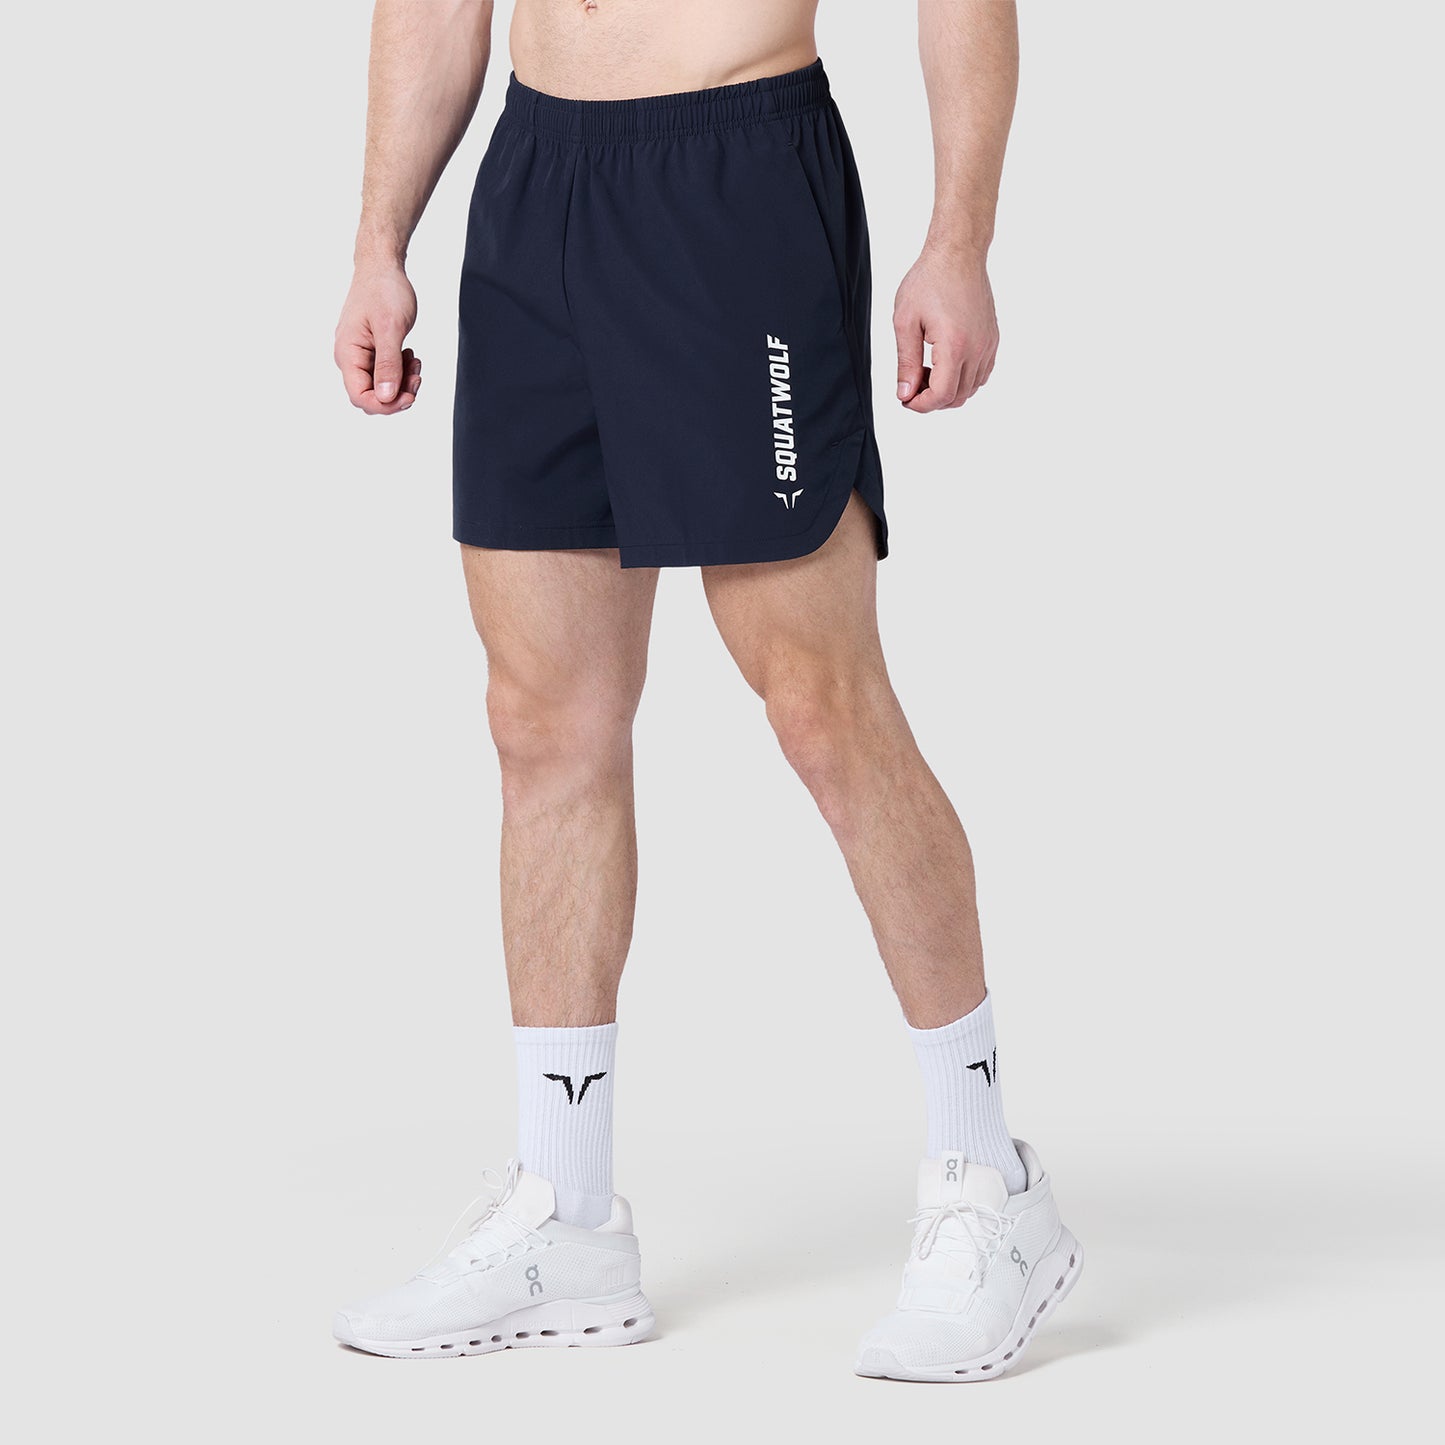 Warrior 5" Shorts 2.0 - Navy